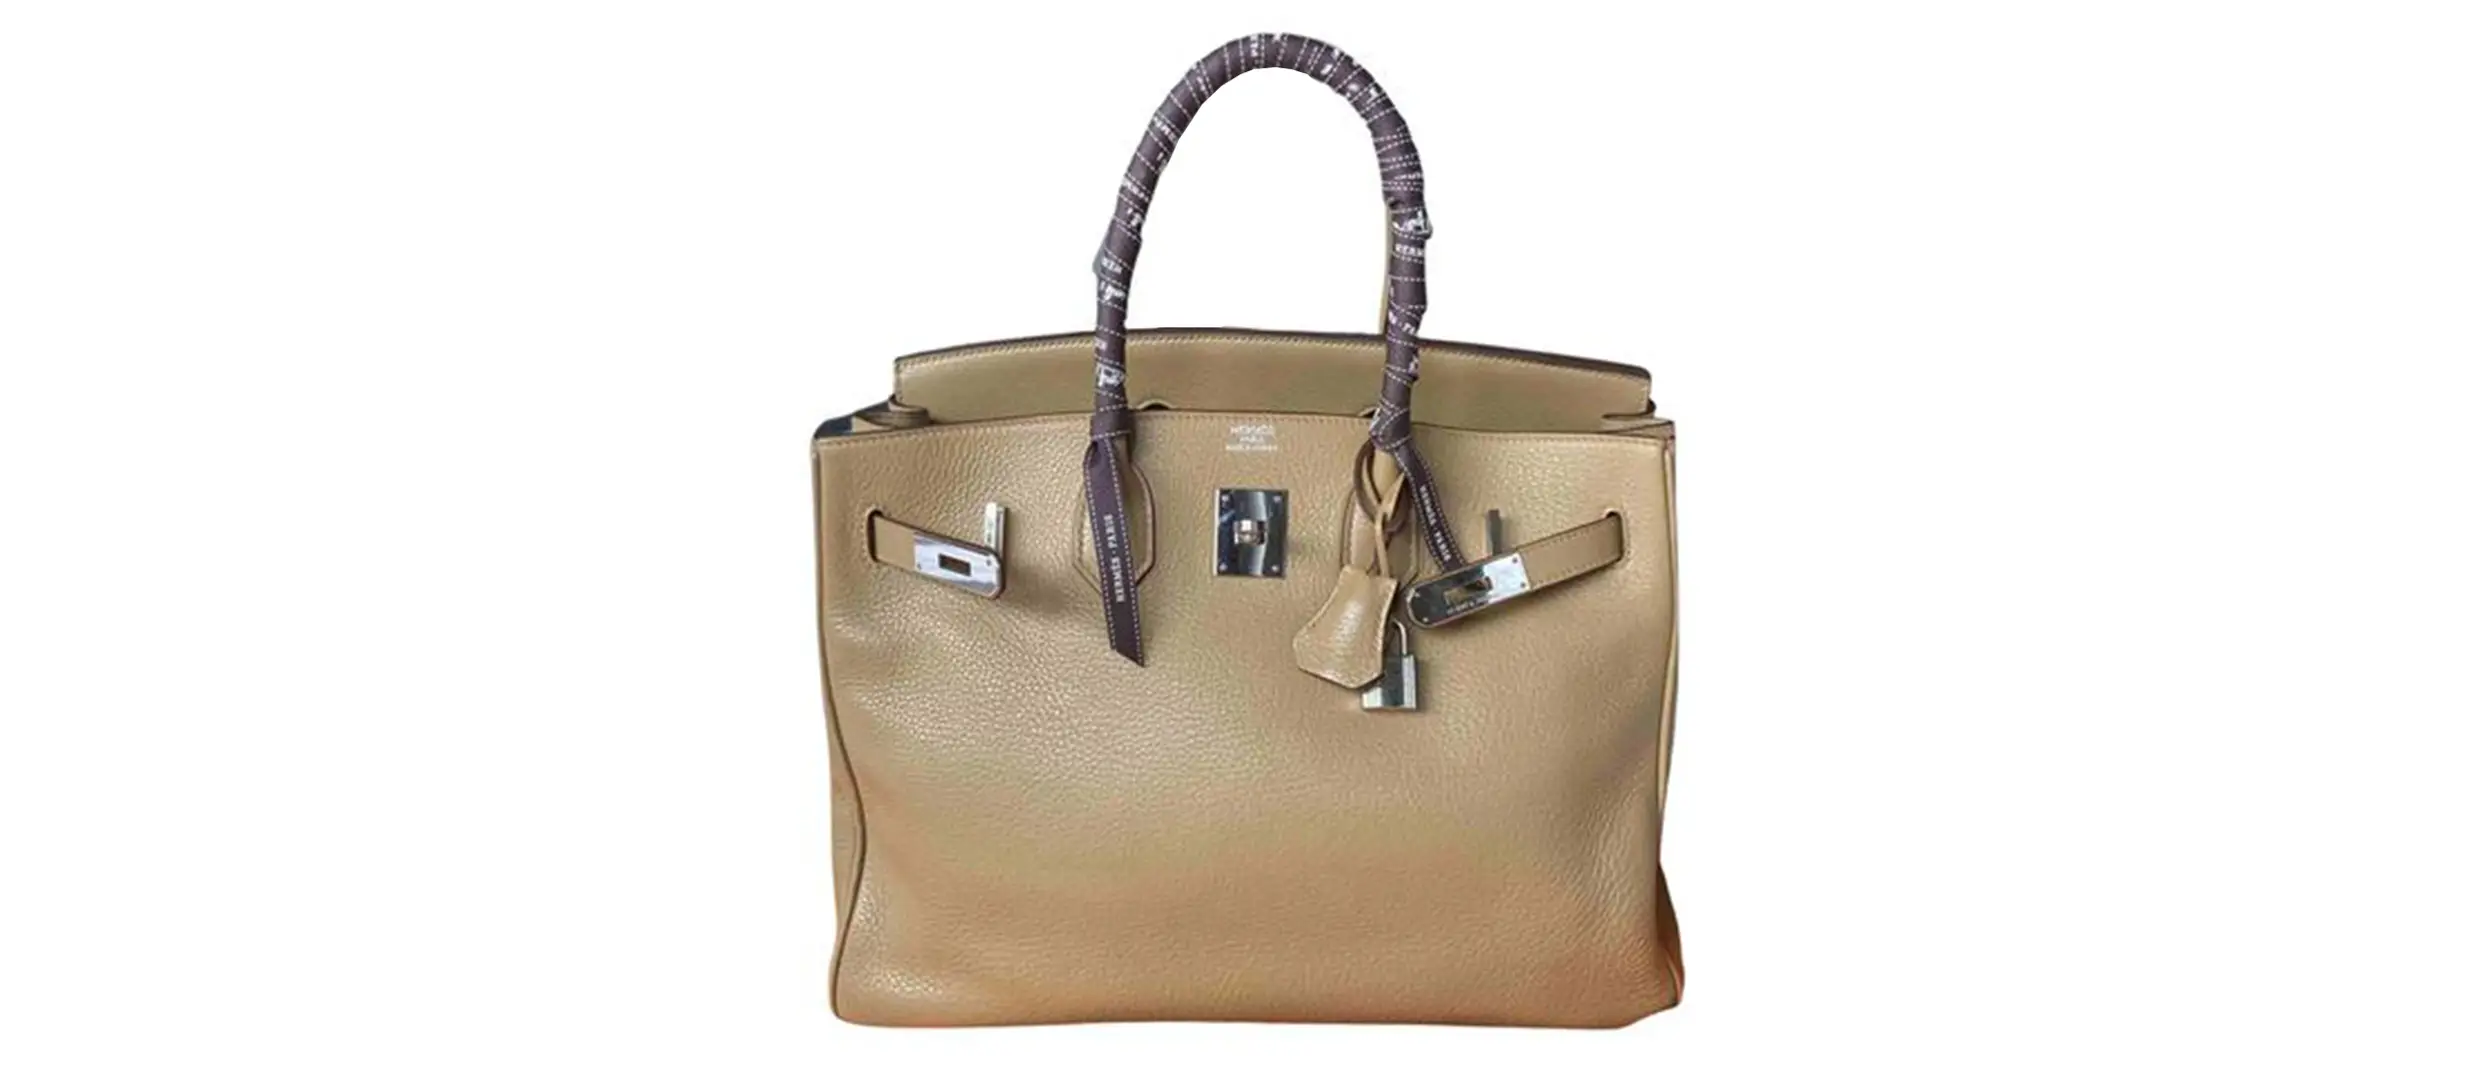 hermes-birkin-35-handbag-in-beige-leather.jpg